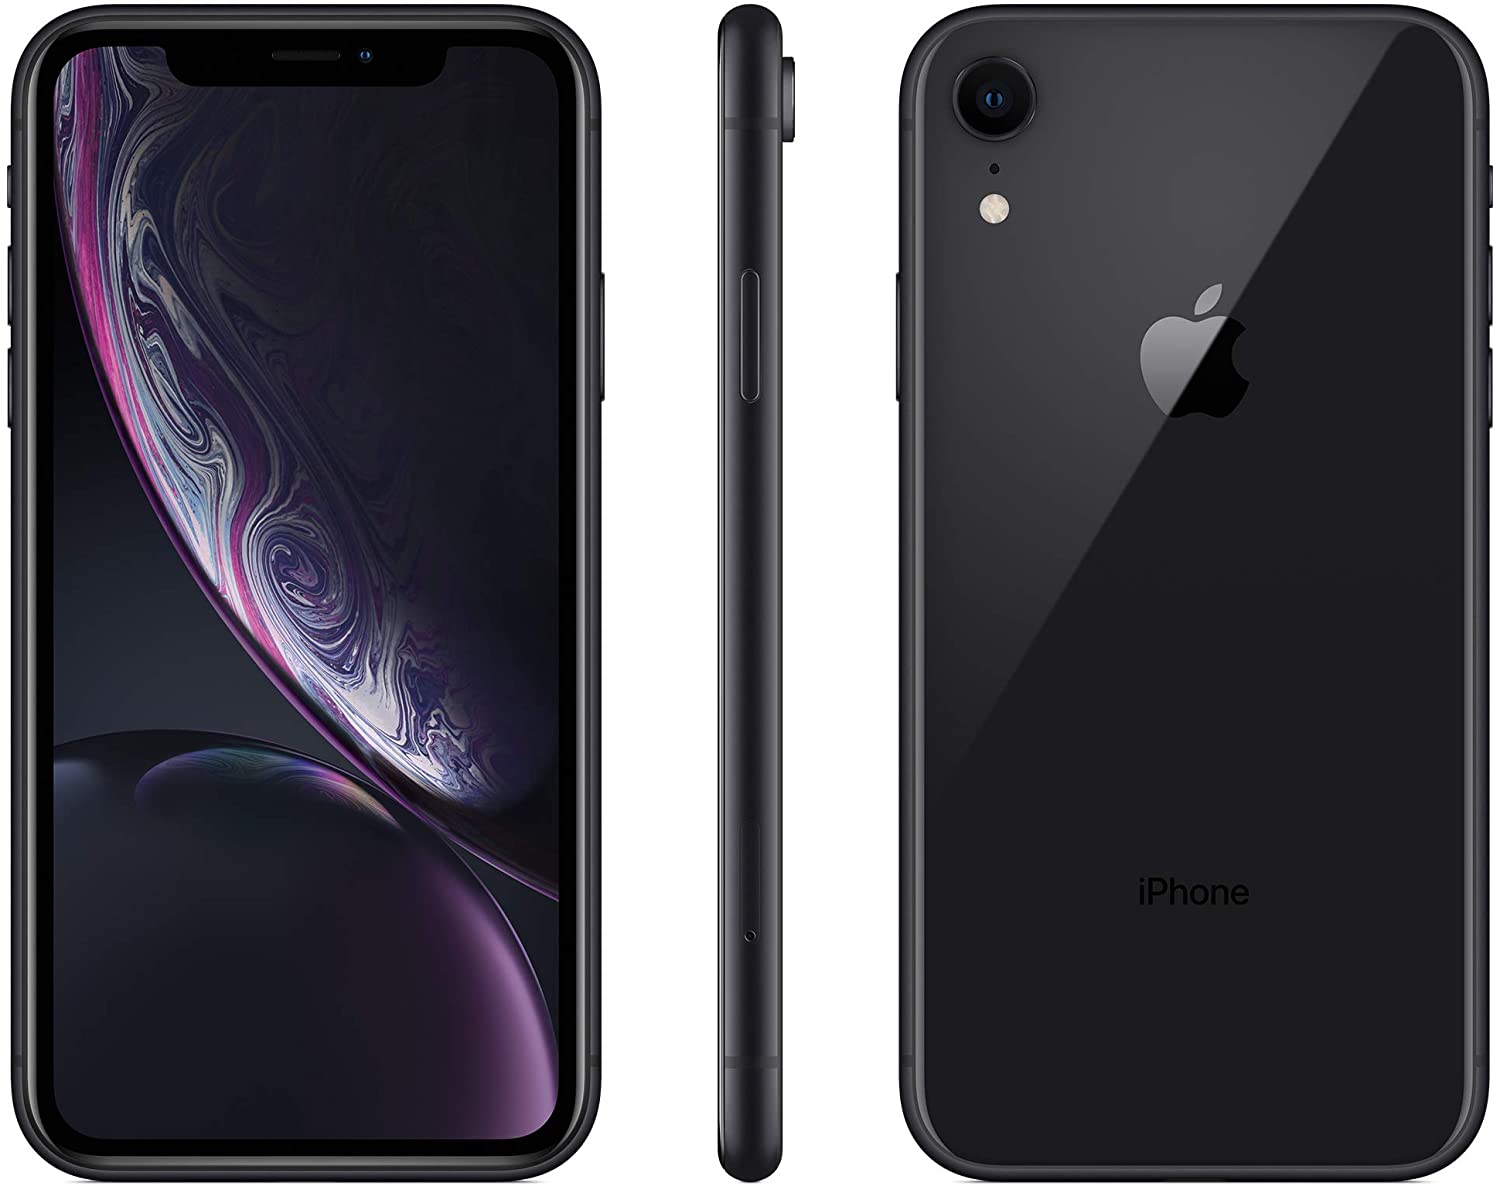 Apple iPhone XR, 64GB, Black - Unlocked (Renewed) - Price in Pakistan